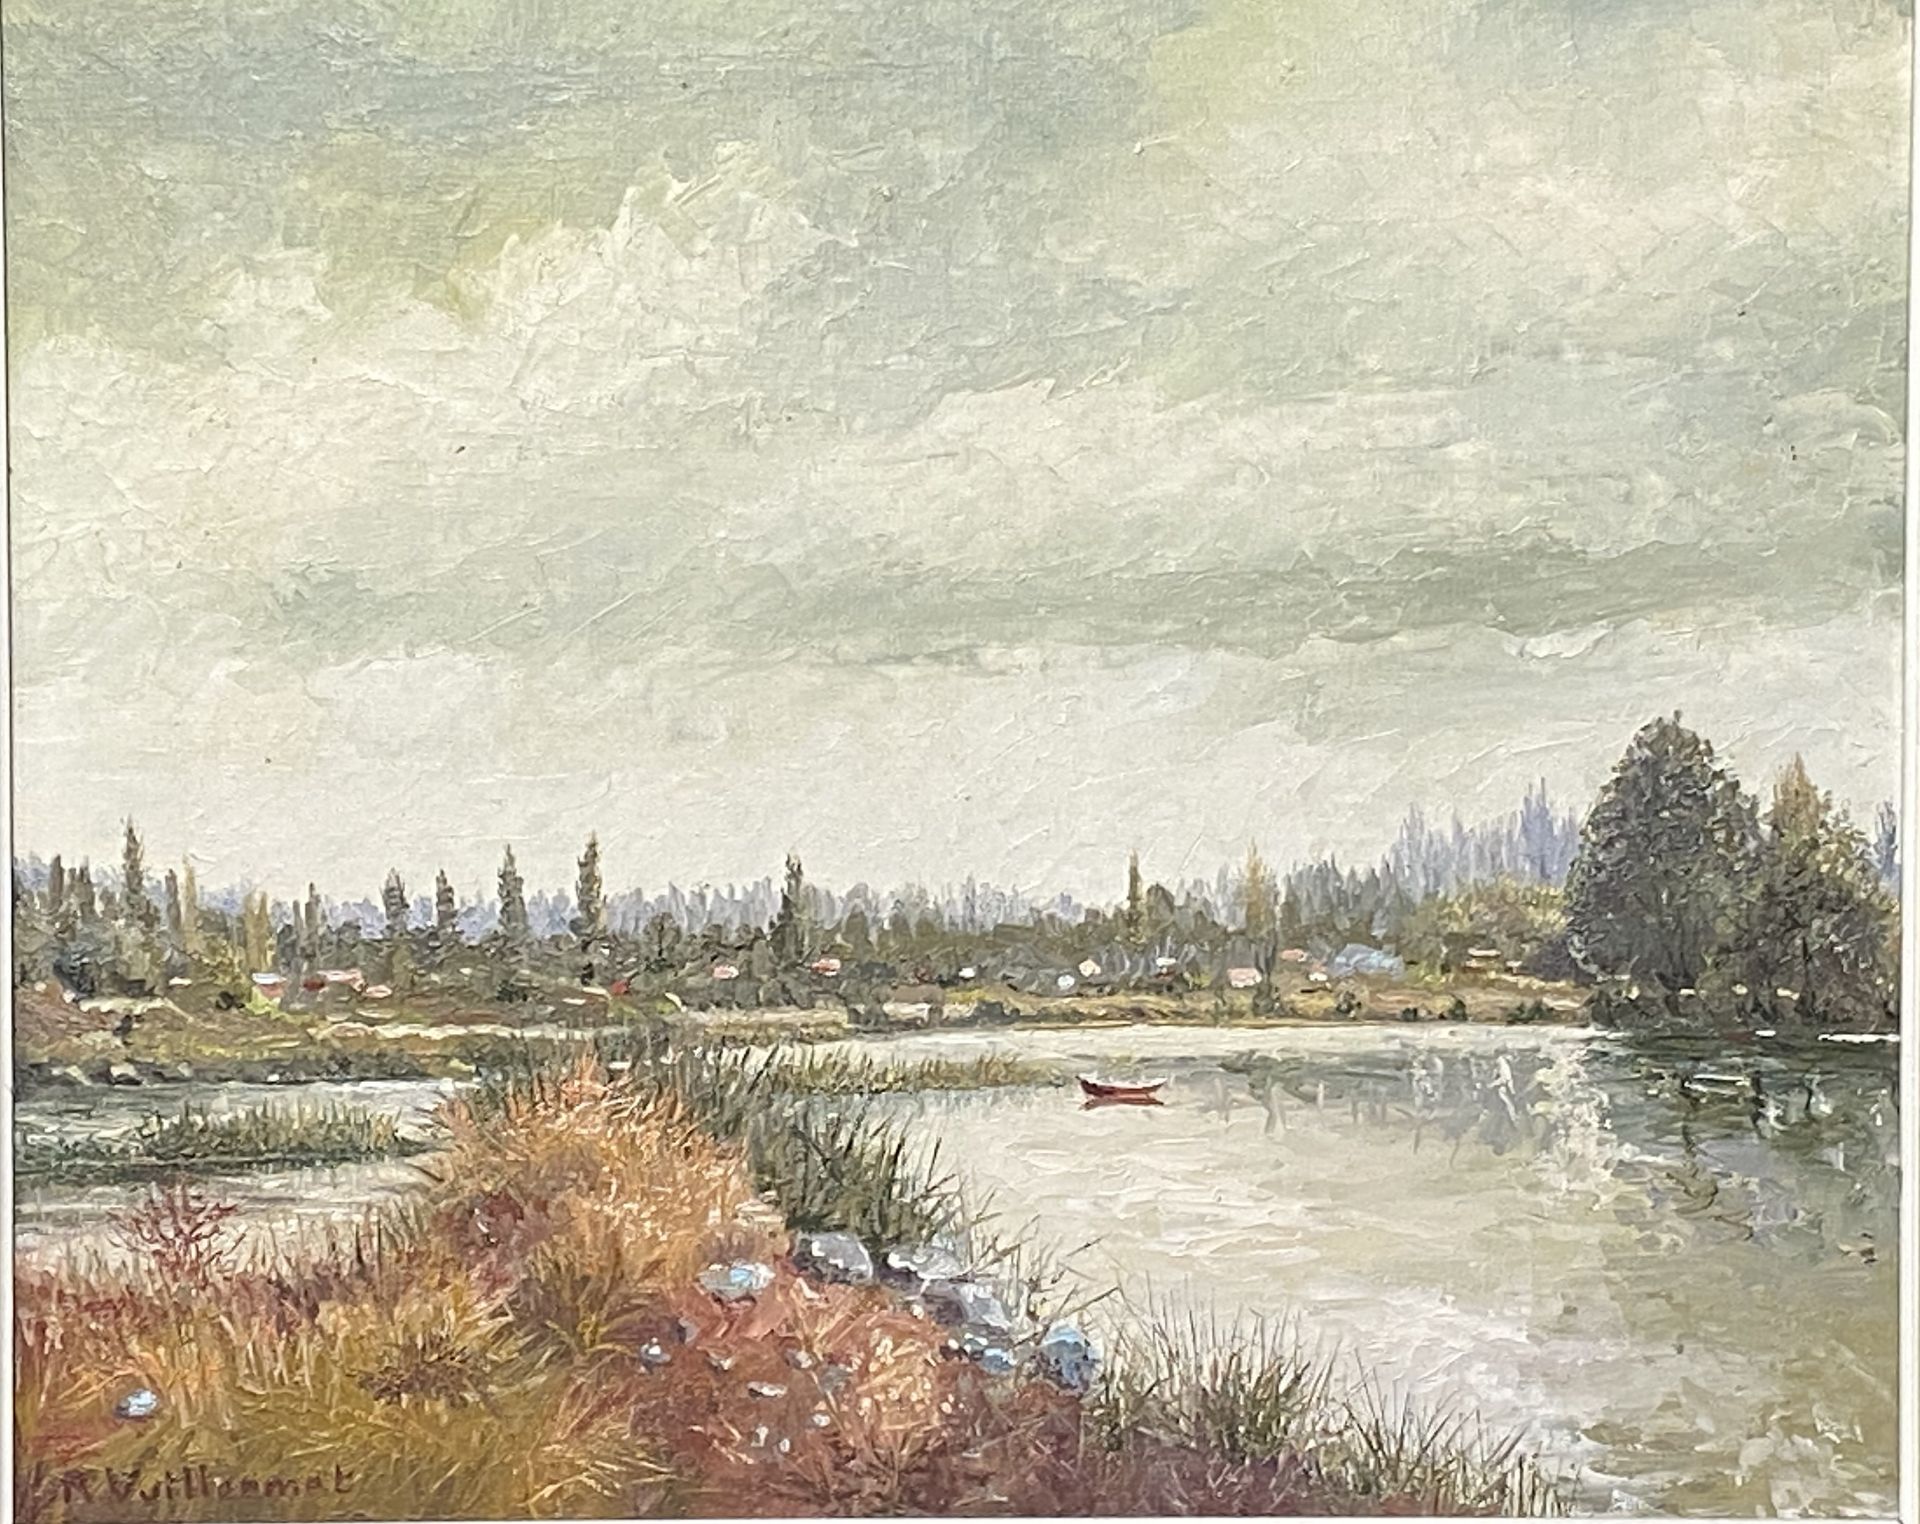 Framed oil on canvas of a river scene